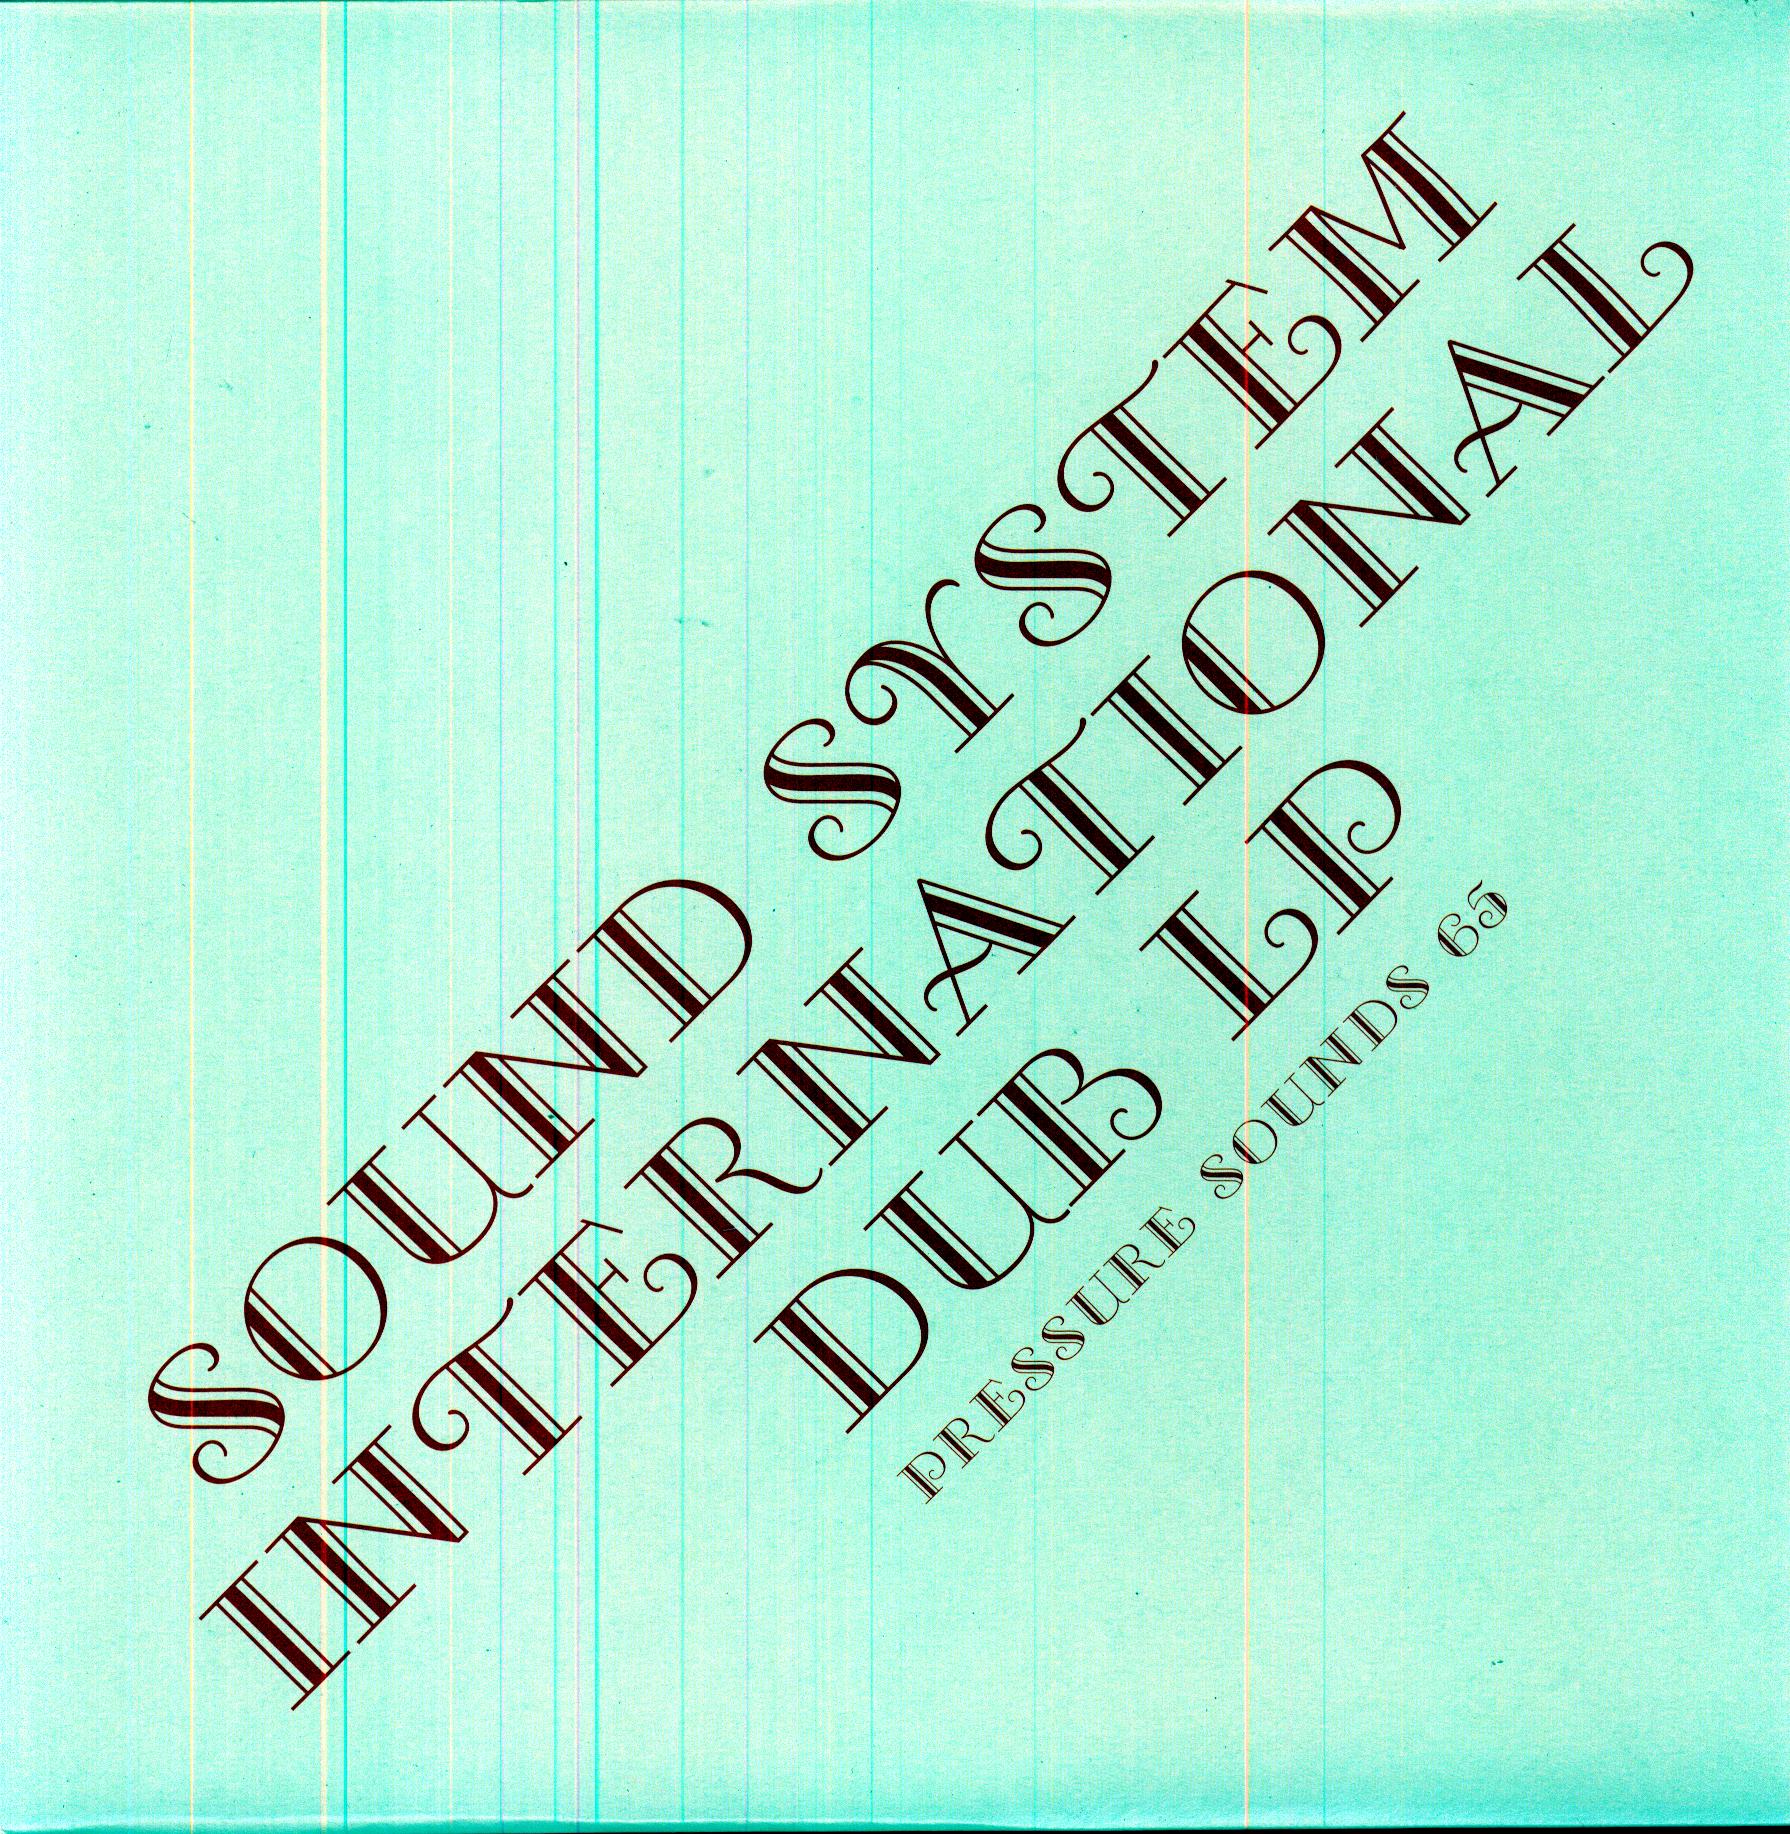 SOUND SYSTEM INTERNATIONAL